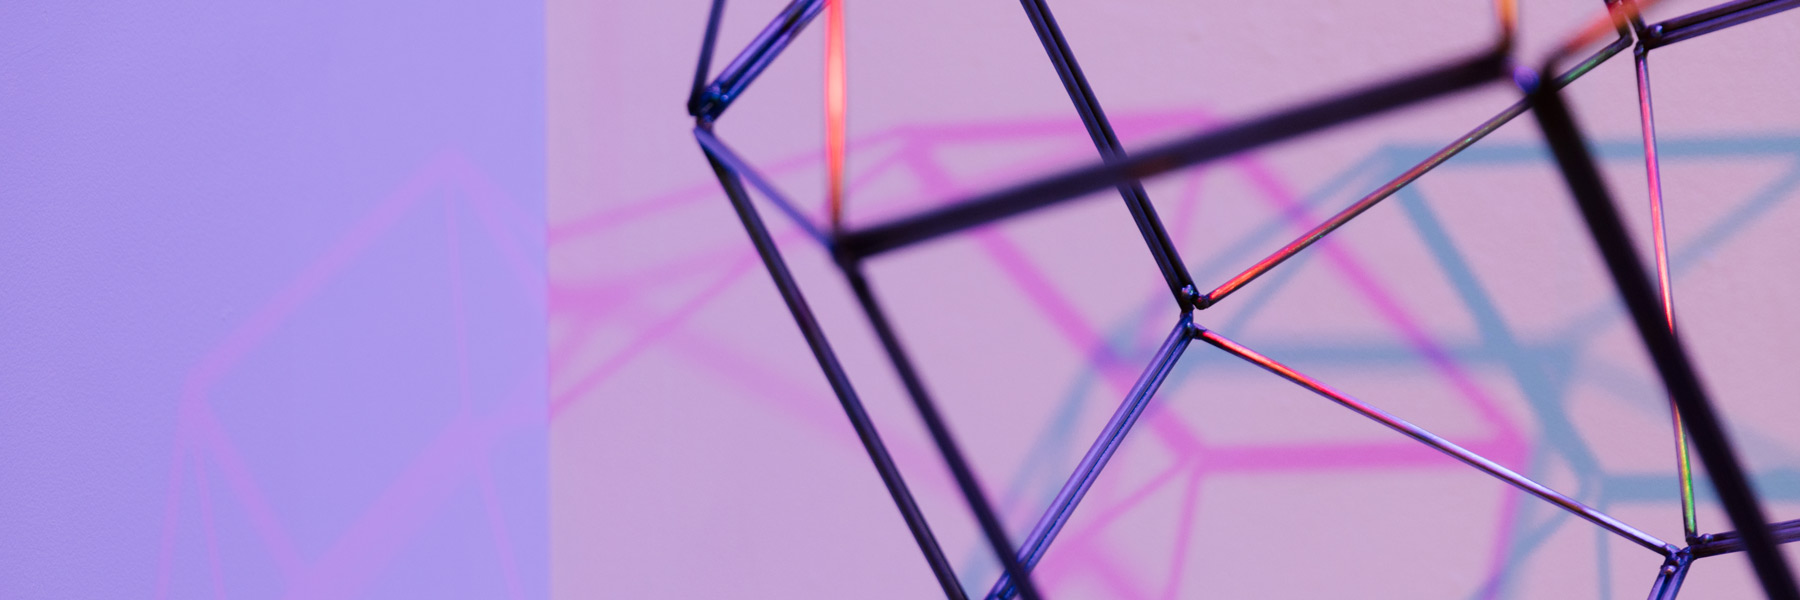 A geometric sculpture hangs against a purple-lit wall.